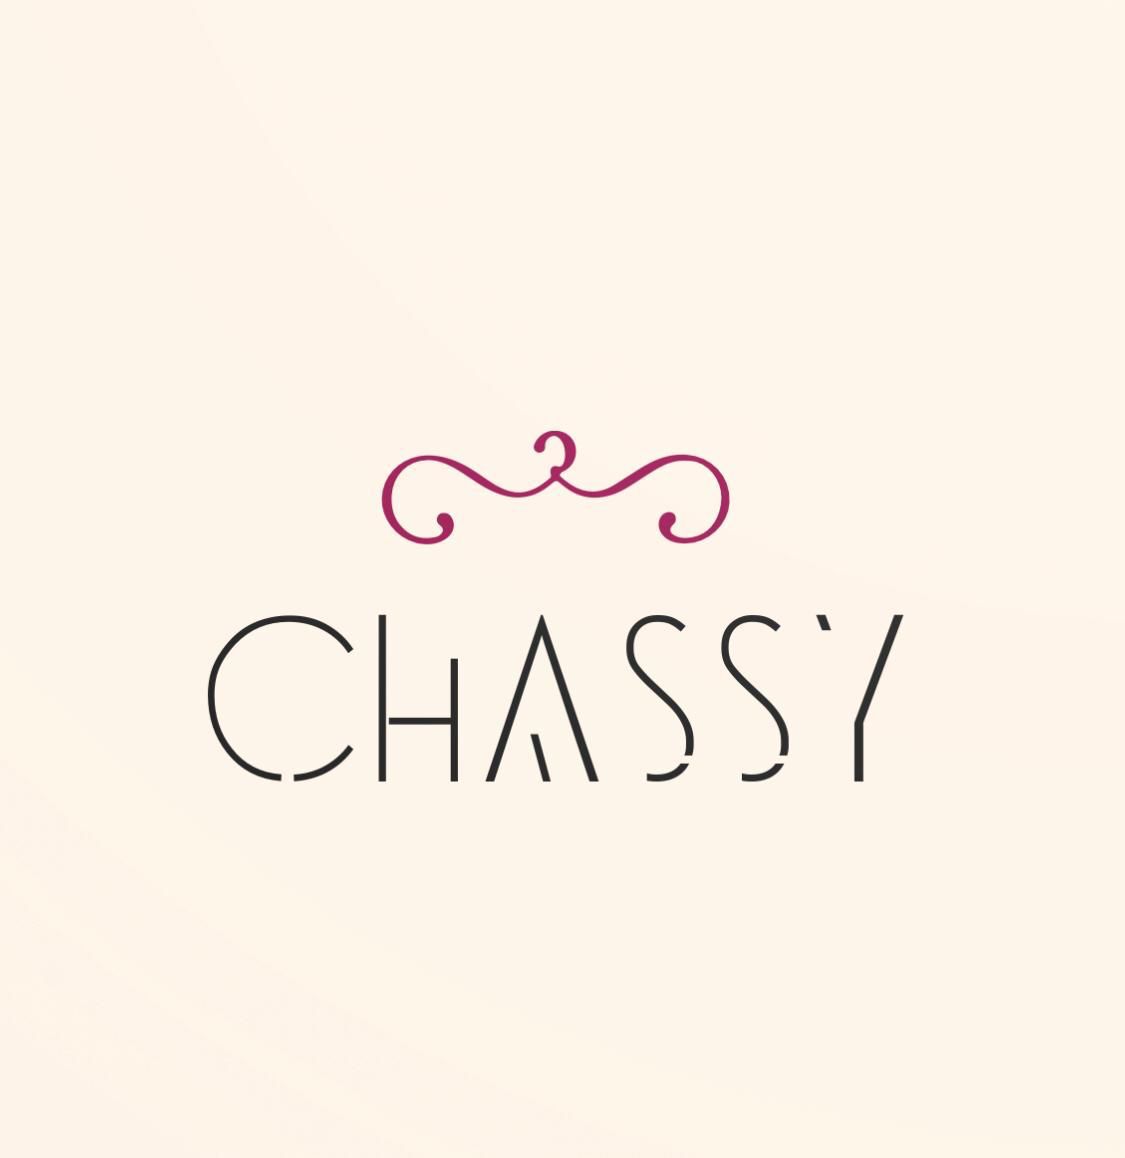 Chassy fashion